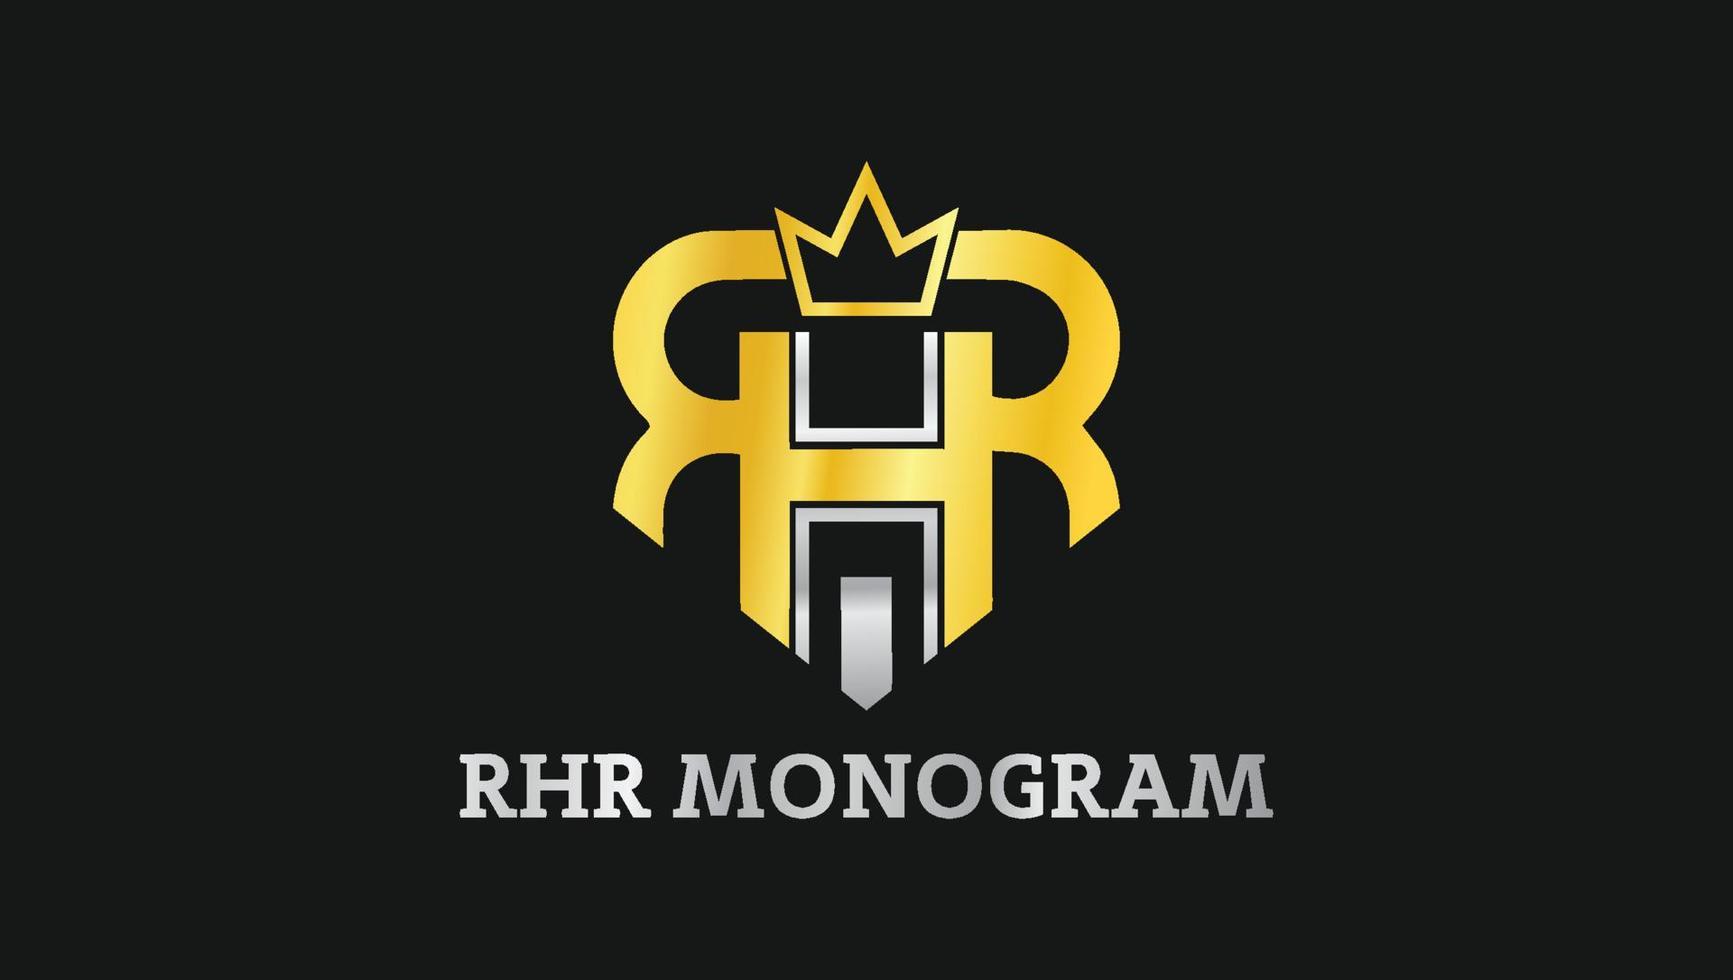 modelo de design de logotipo de monograma de luxo rhr vetor